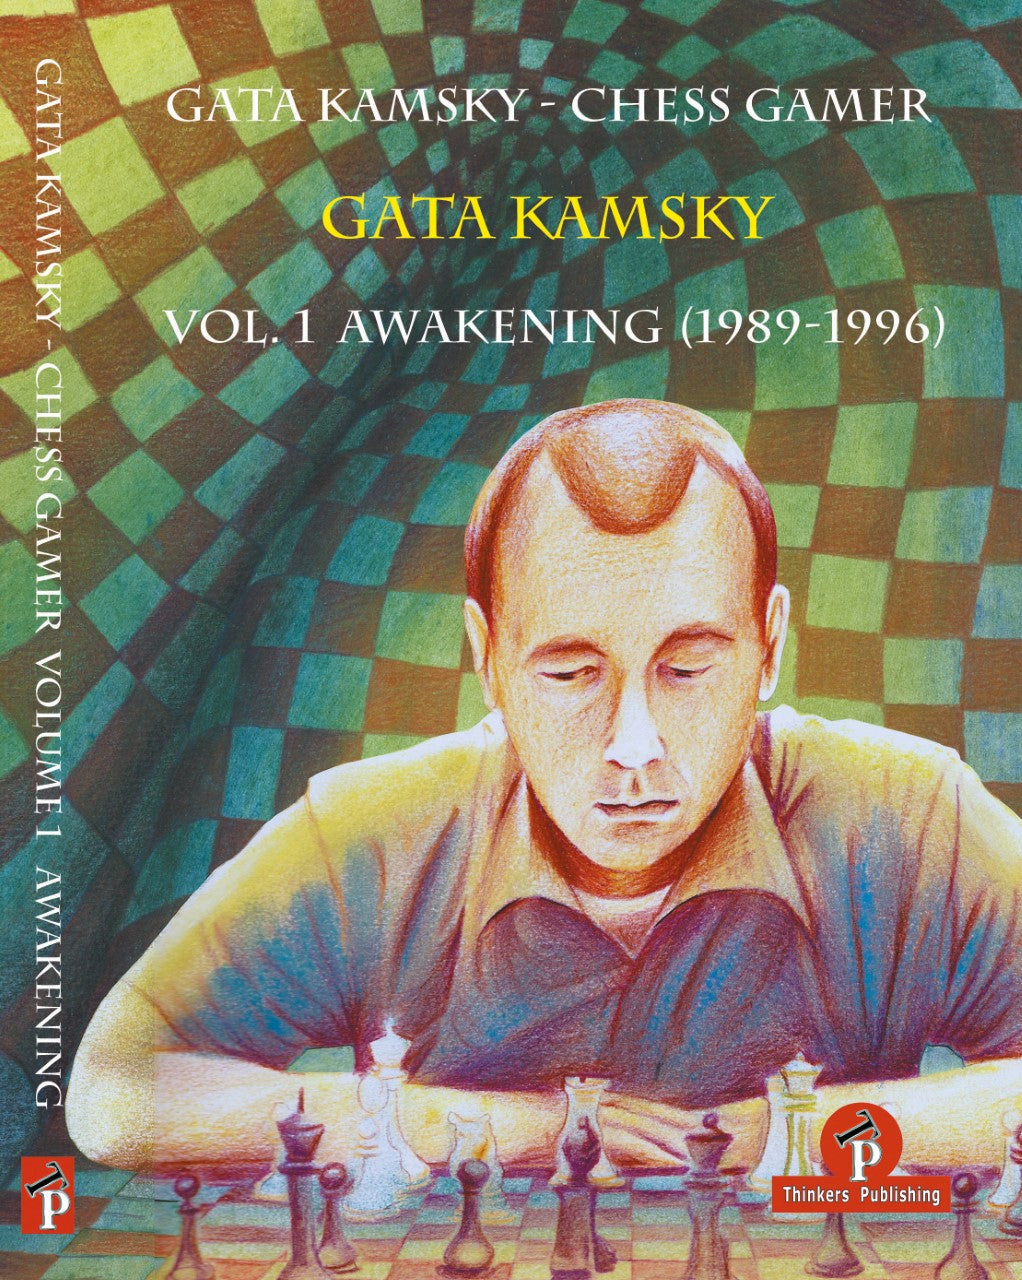 Kamsky: Gata Kamsky - Chess Gamer - Vol.1